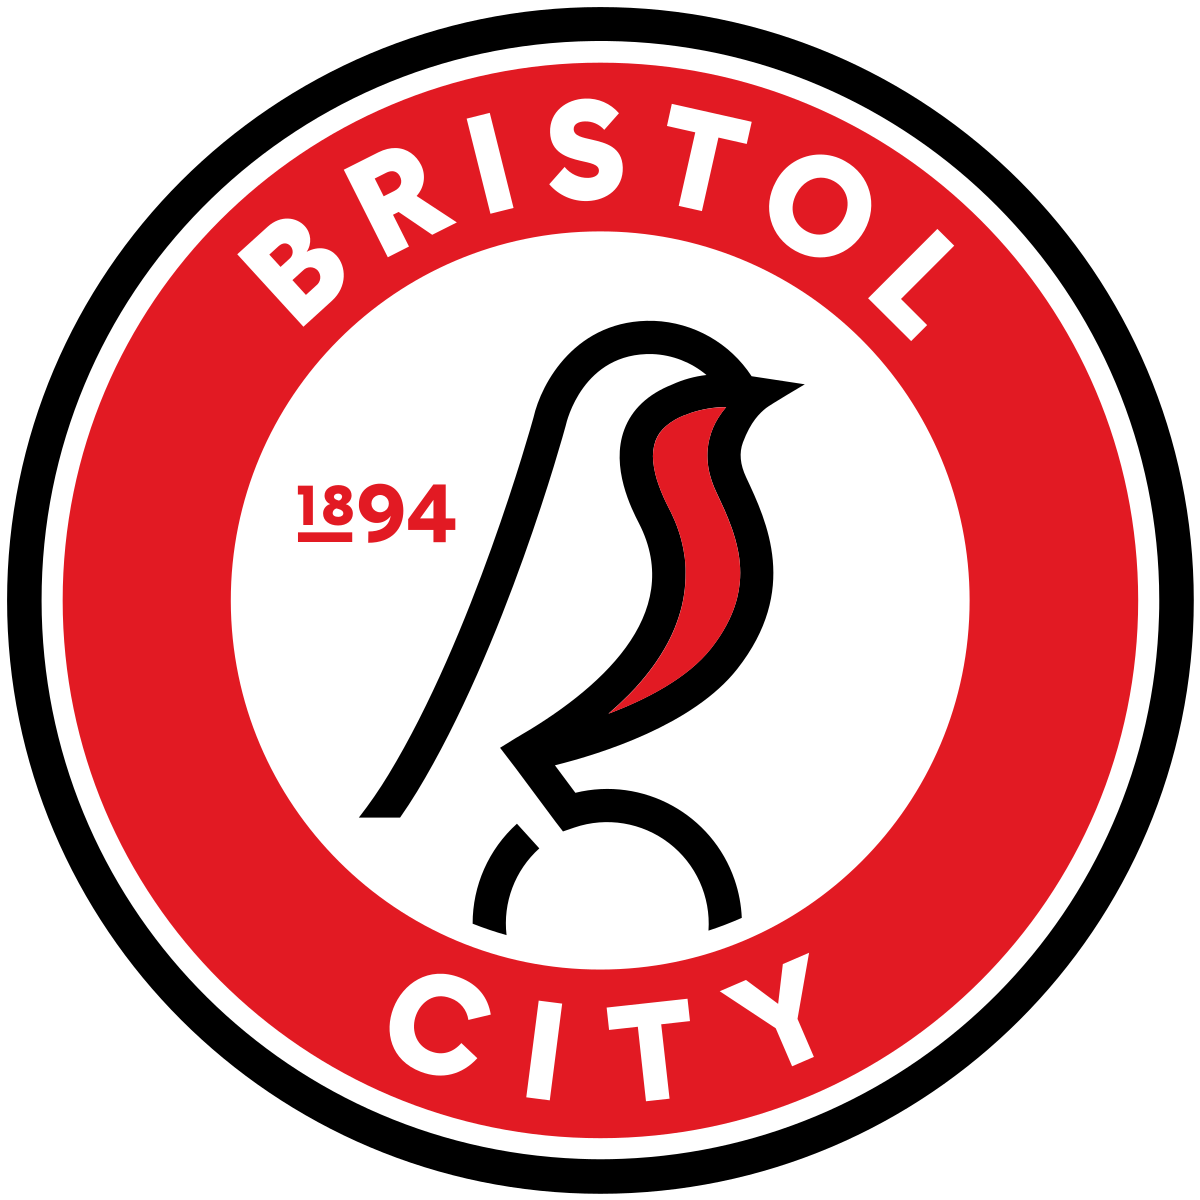 Bristol City v Peterborough United - Hospitality